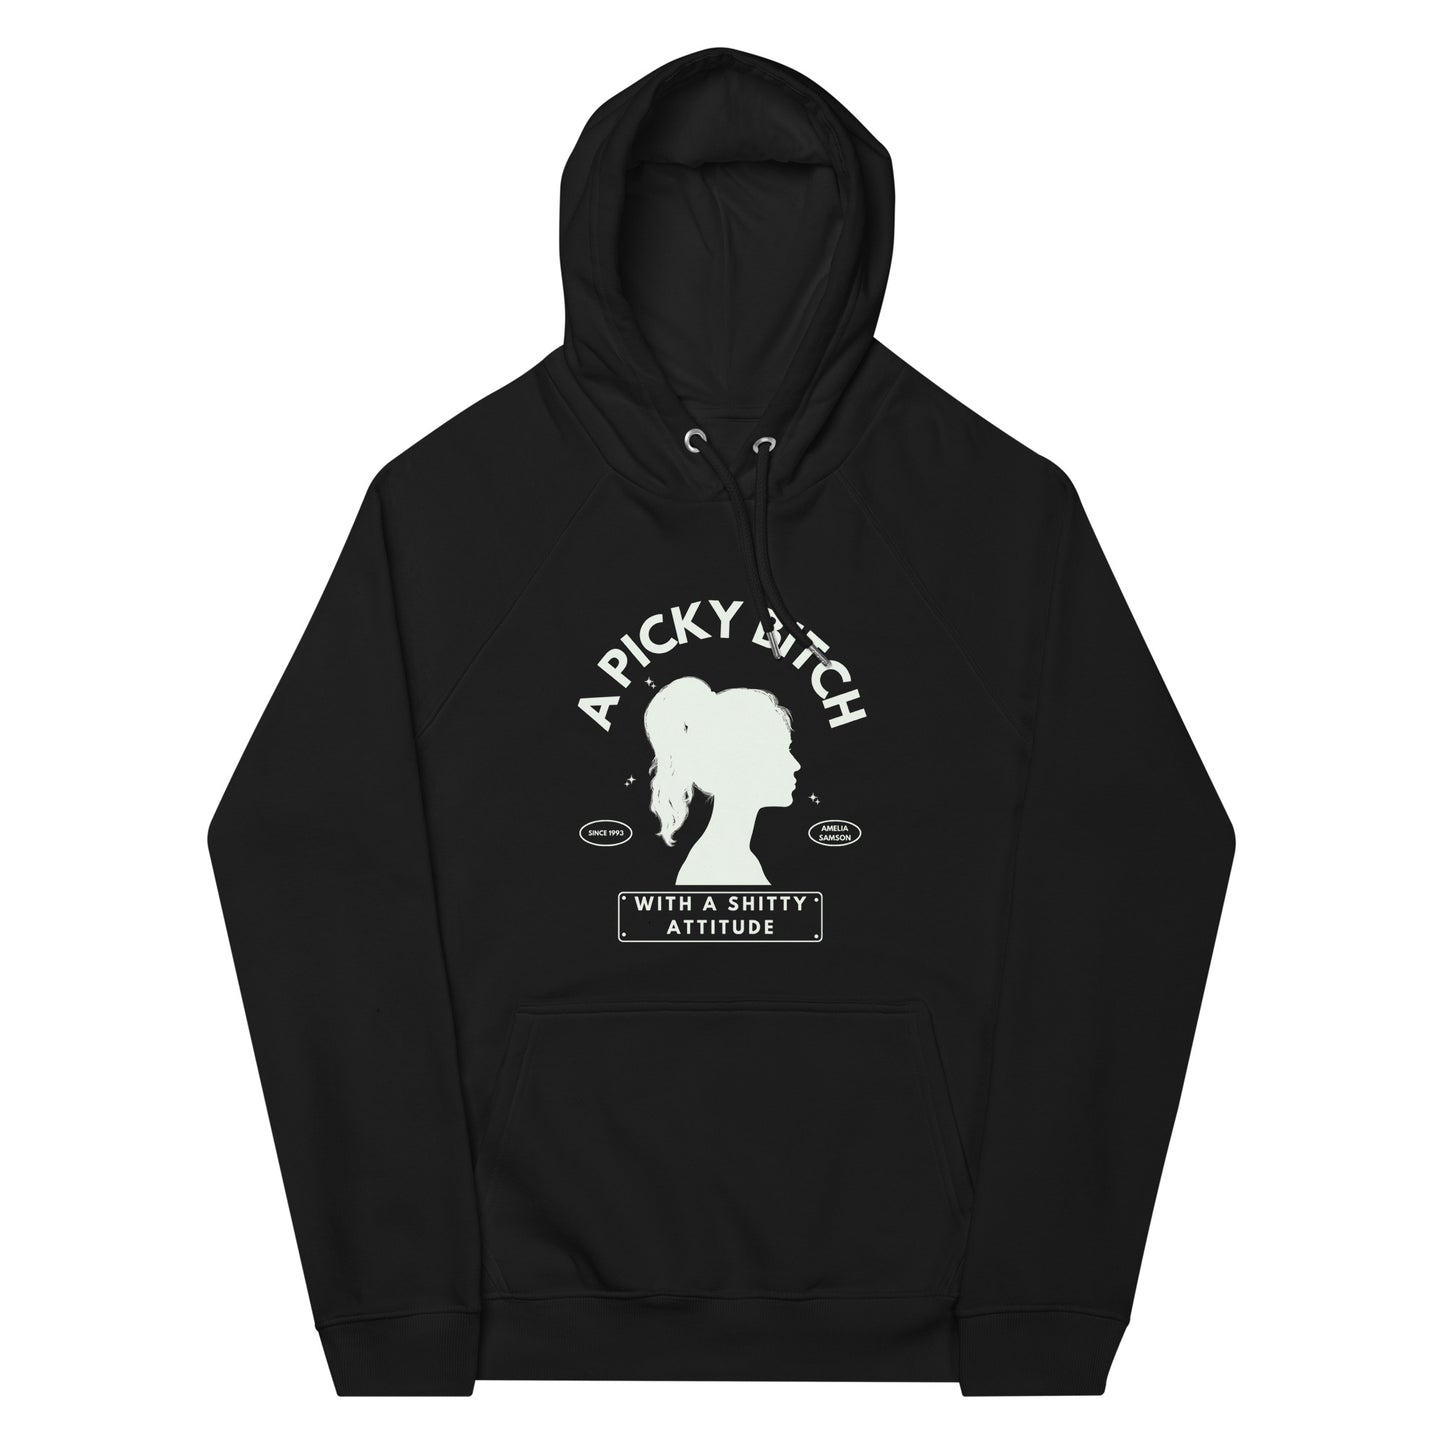 "a picky bitch" hoodie